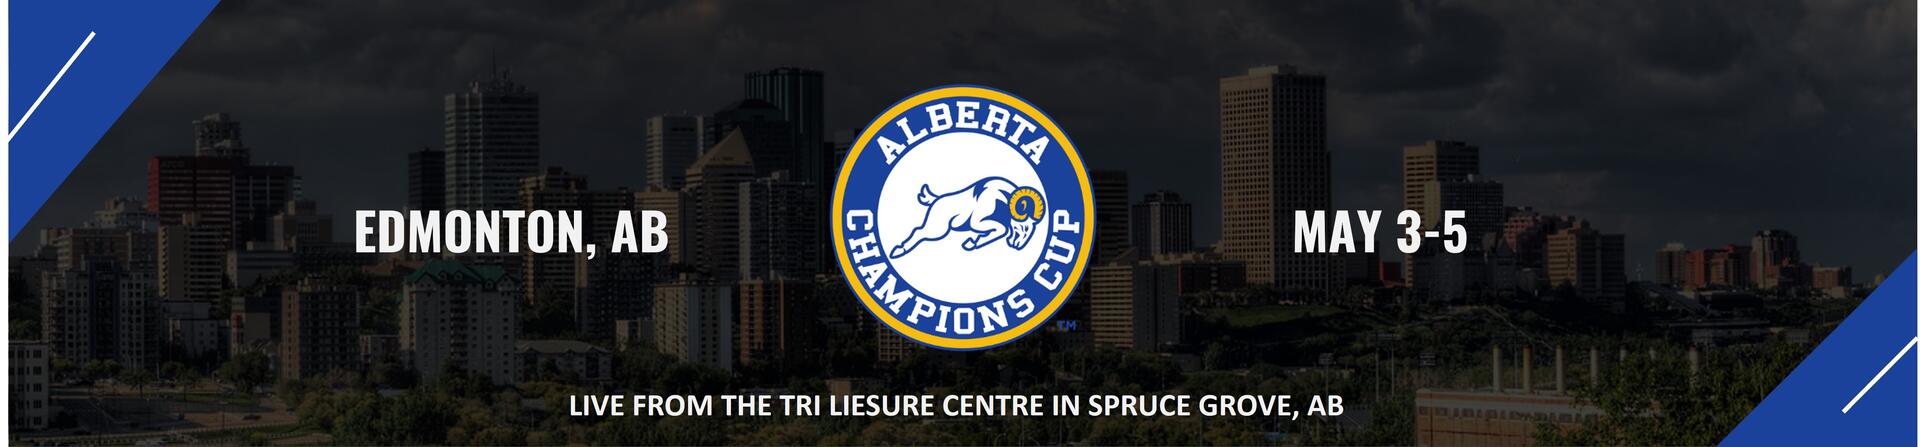 Alberta Champions Cup Edmonton